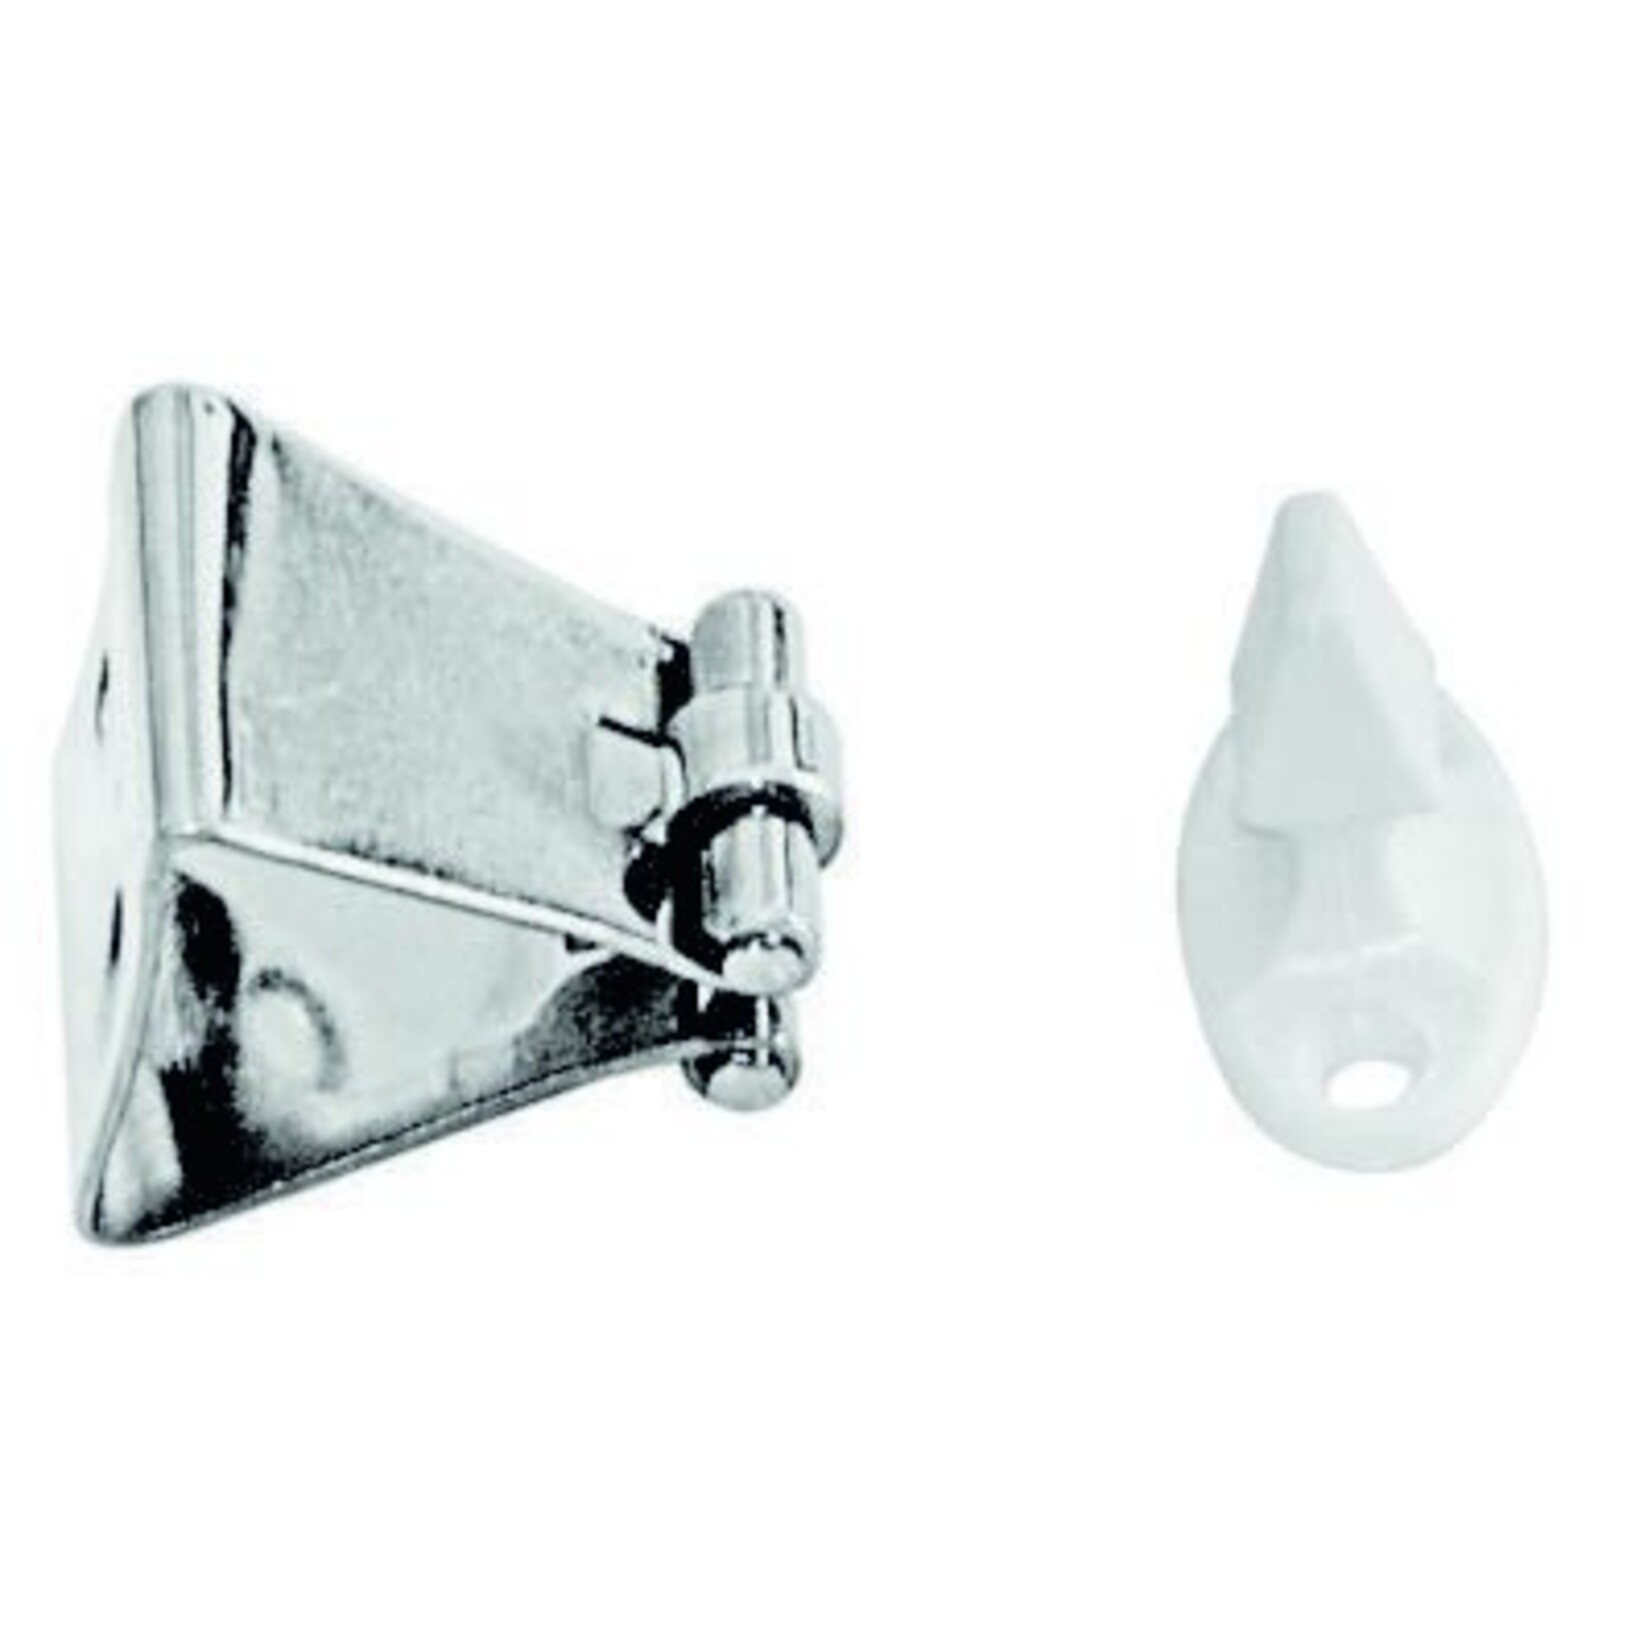 Plastimo Door holder ss 27x28x37mm